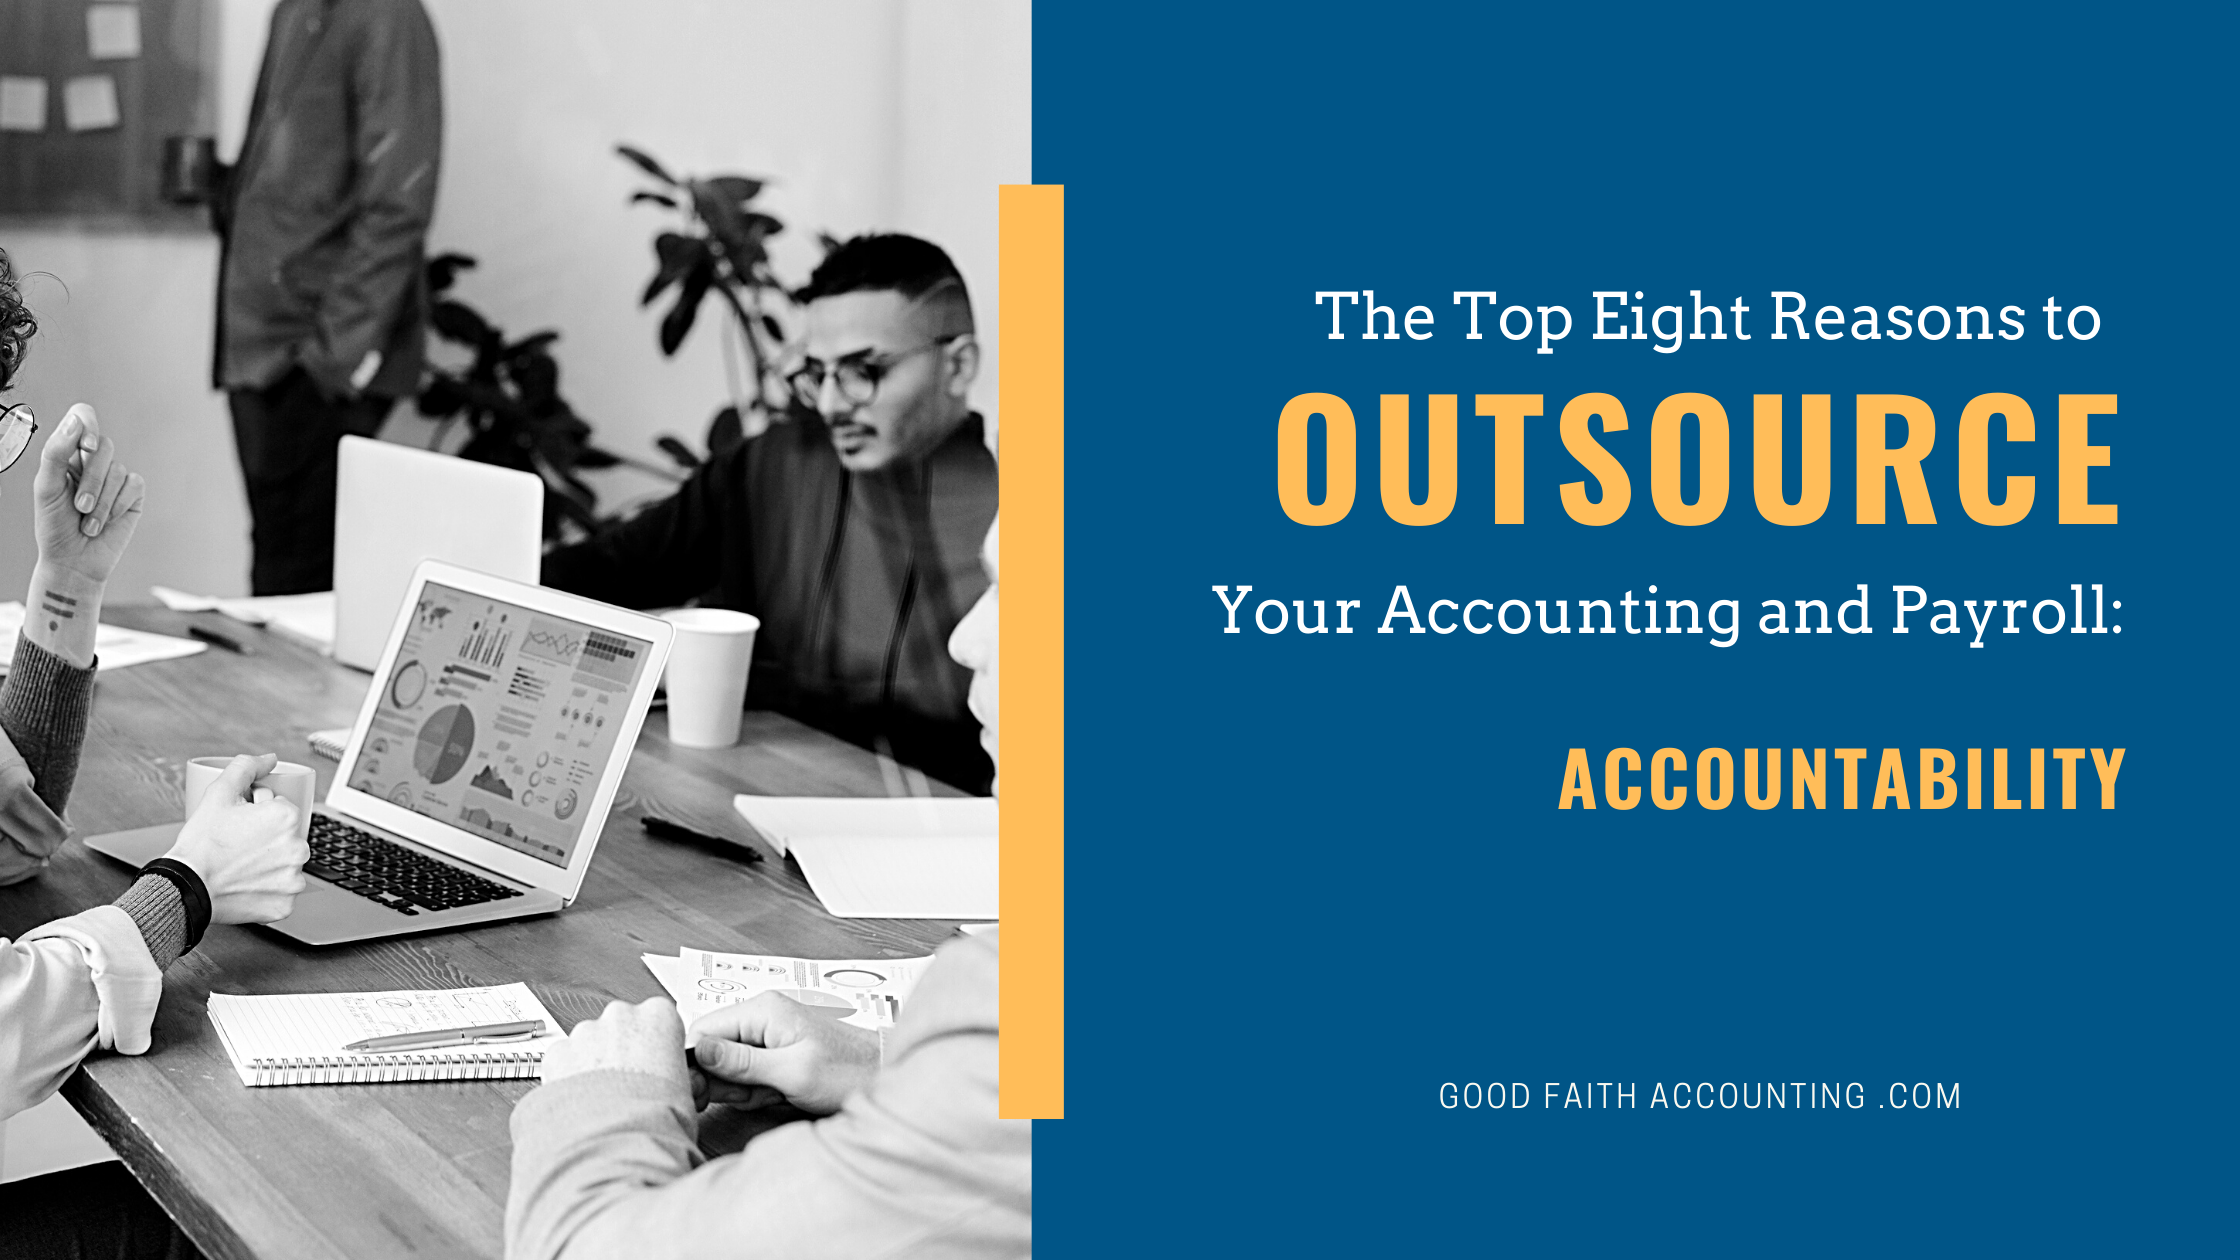 Outsource - Accountability